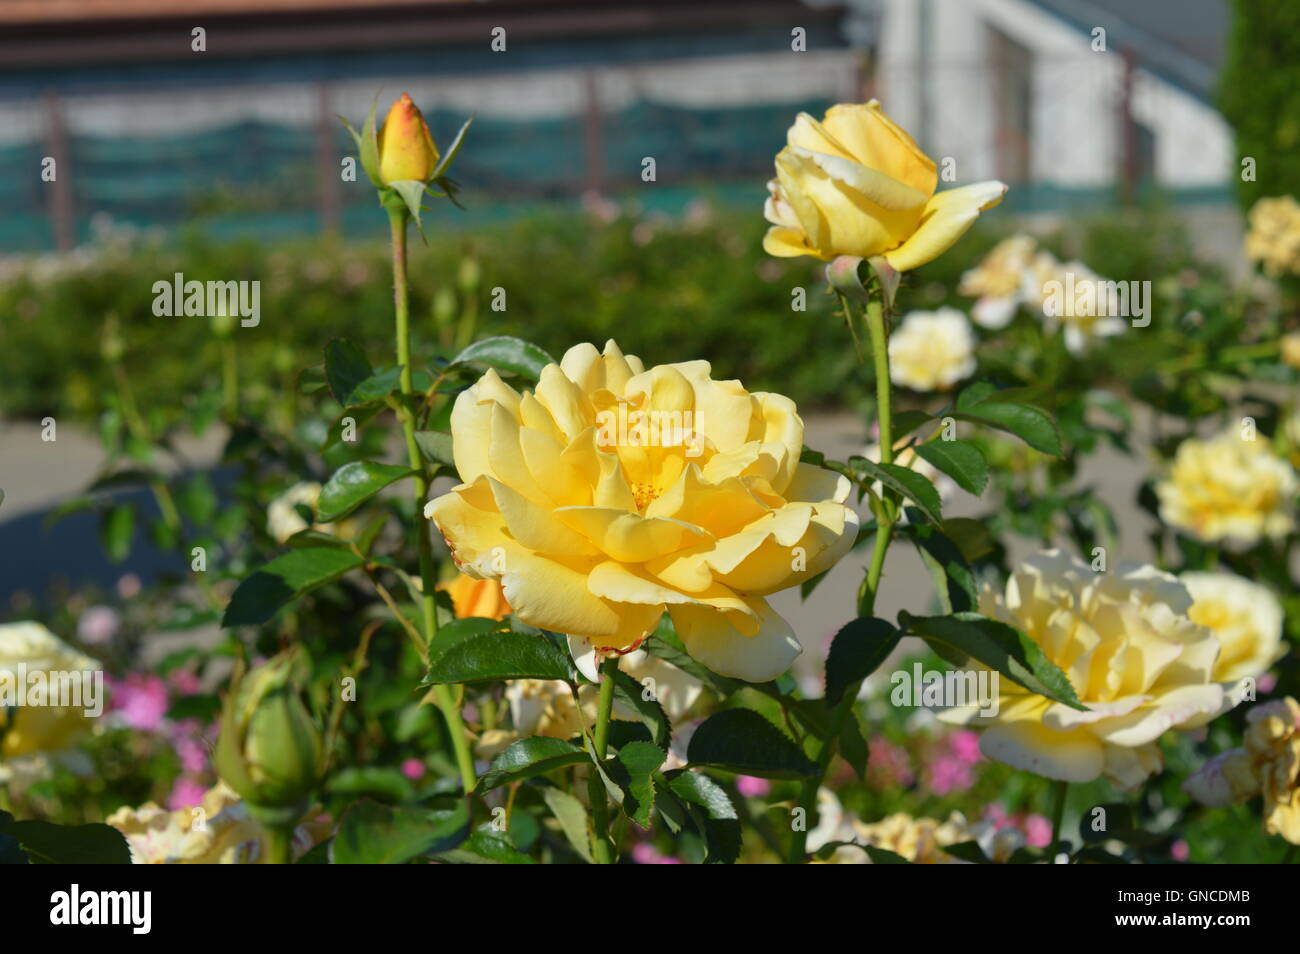 Large-Flowered Rose 'Glorius' Stock Photo